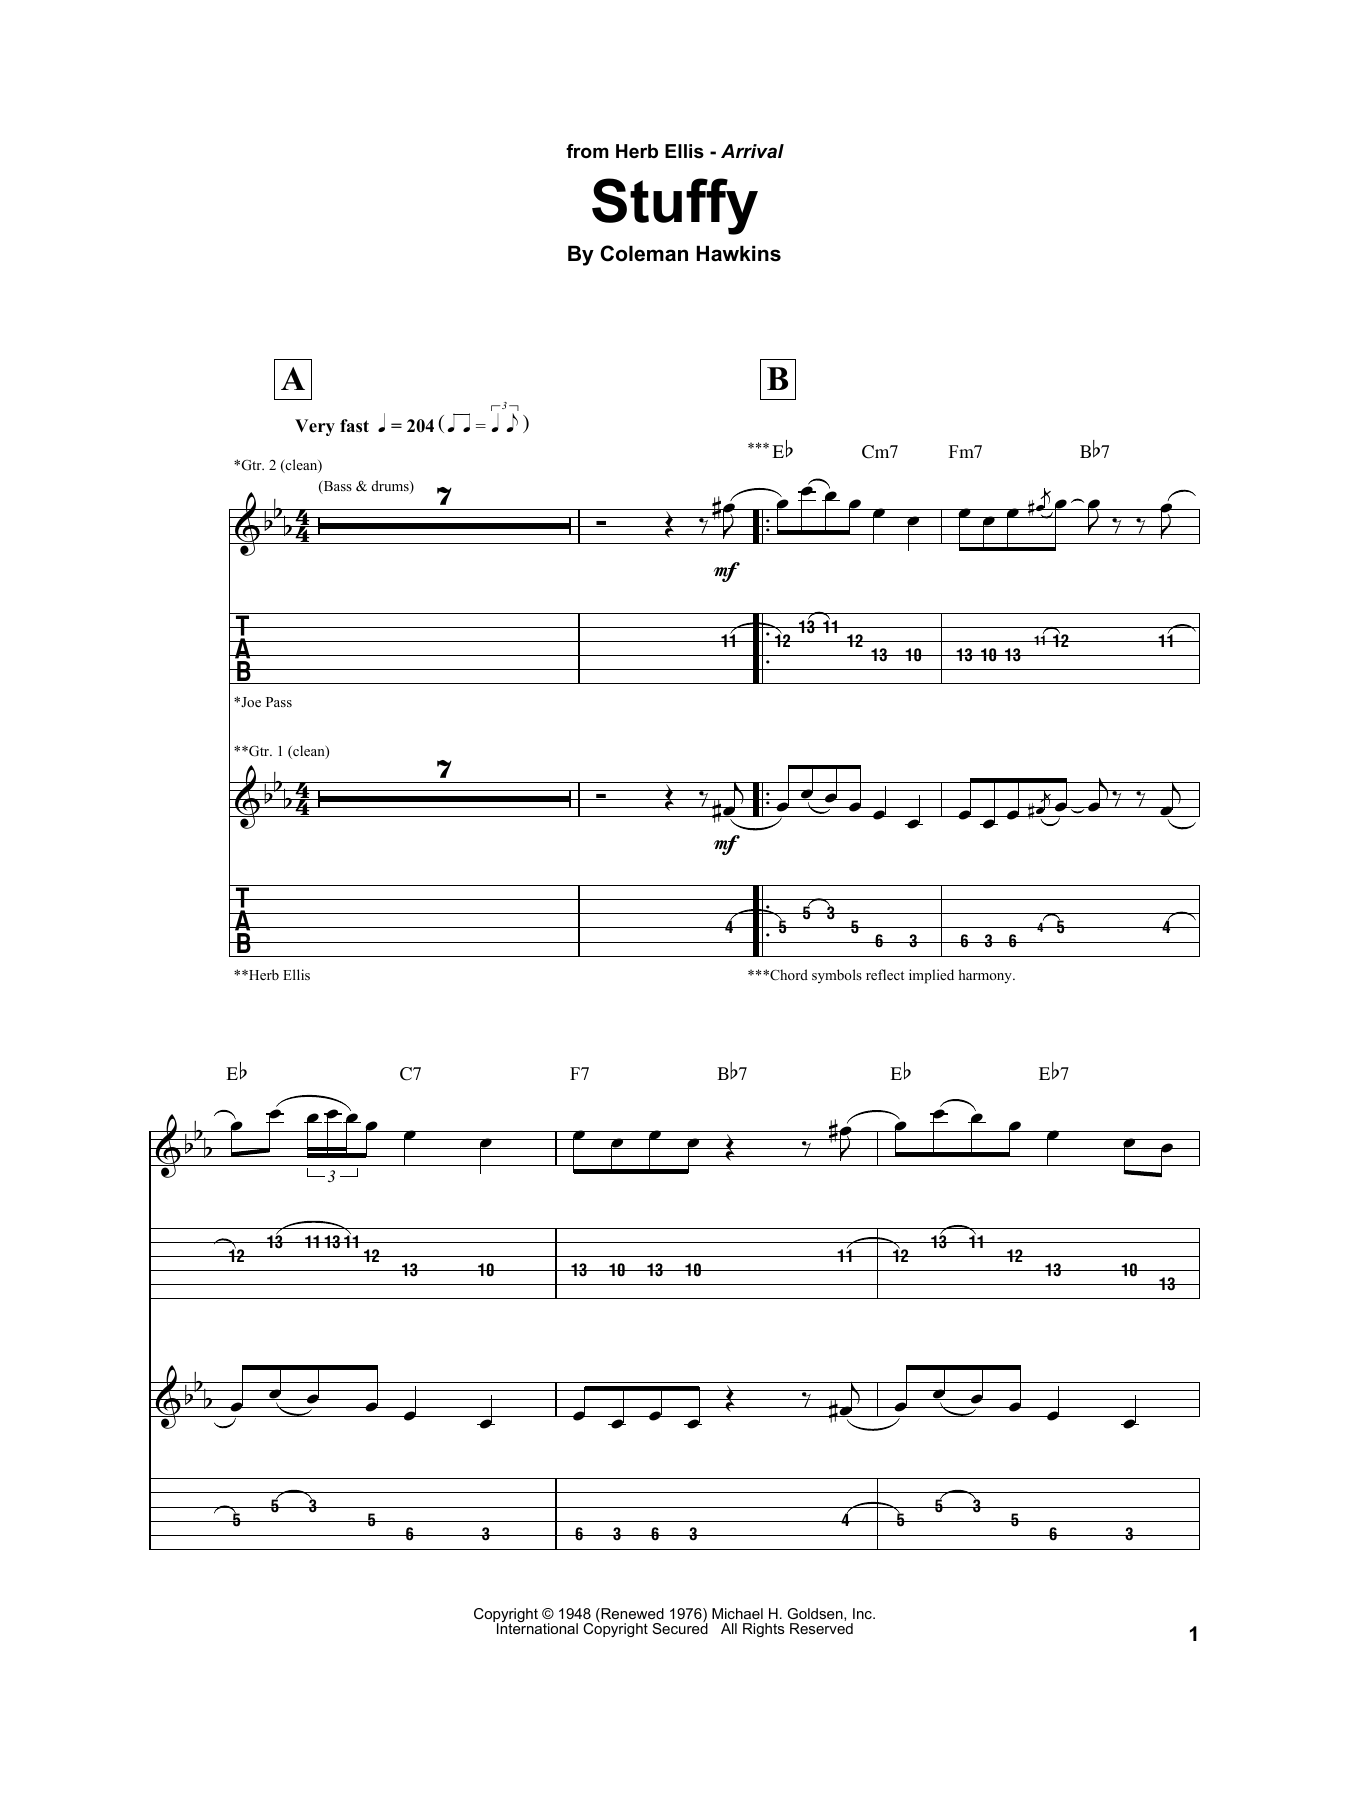 Herb Ellis Stuffy Sheet Music Notes & Chords for Electric Guitar Transcription - Download or Print PDF